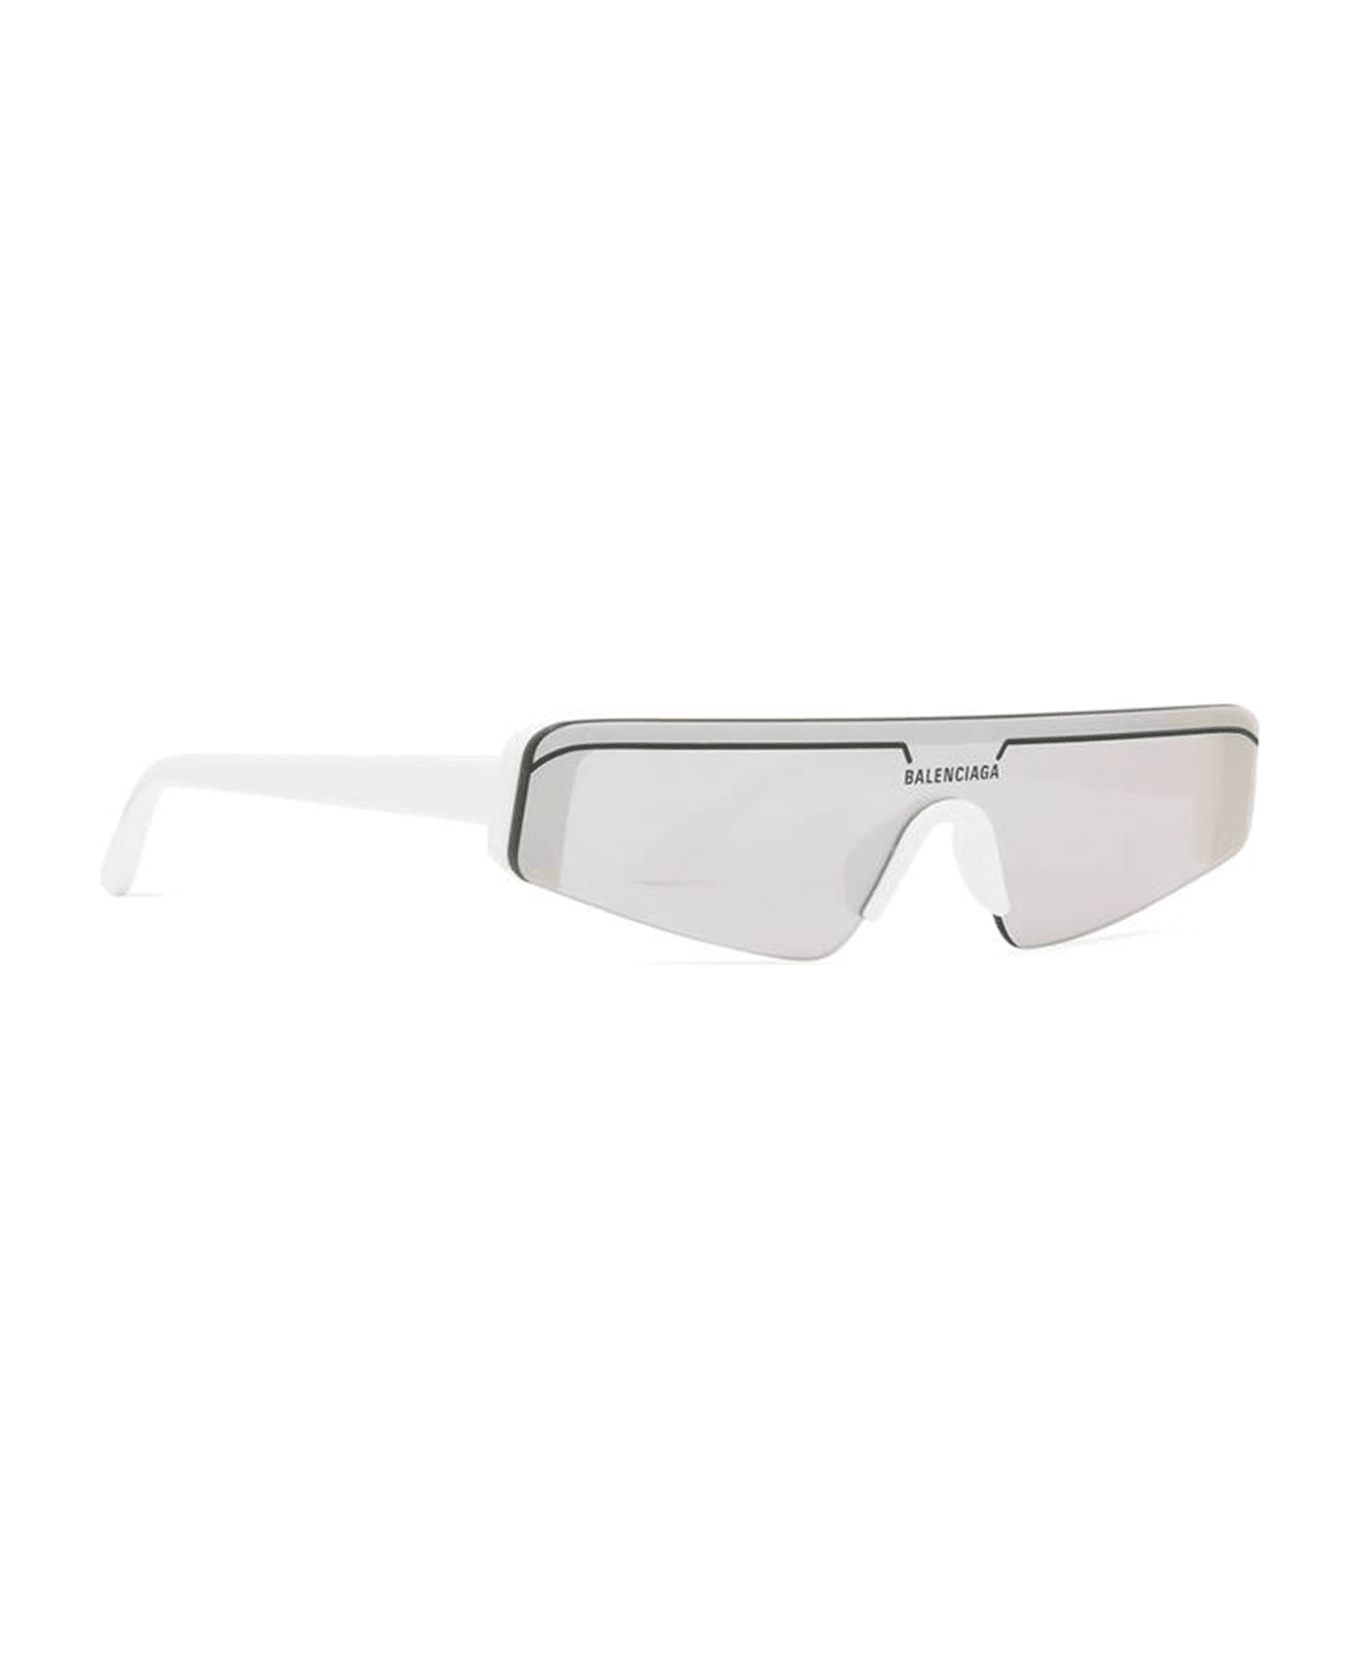 Balenciaga Eyewear Bb0003s Linea Extreme 002 Sunglasses - White サングラス